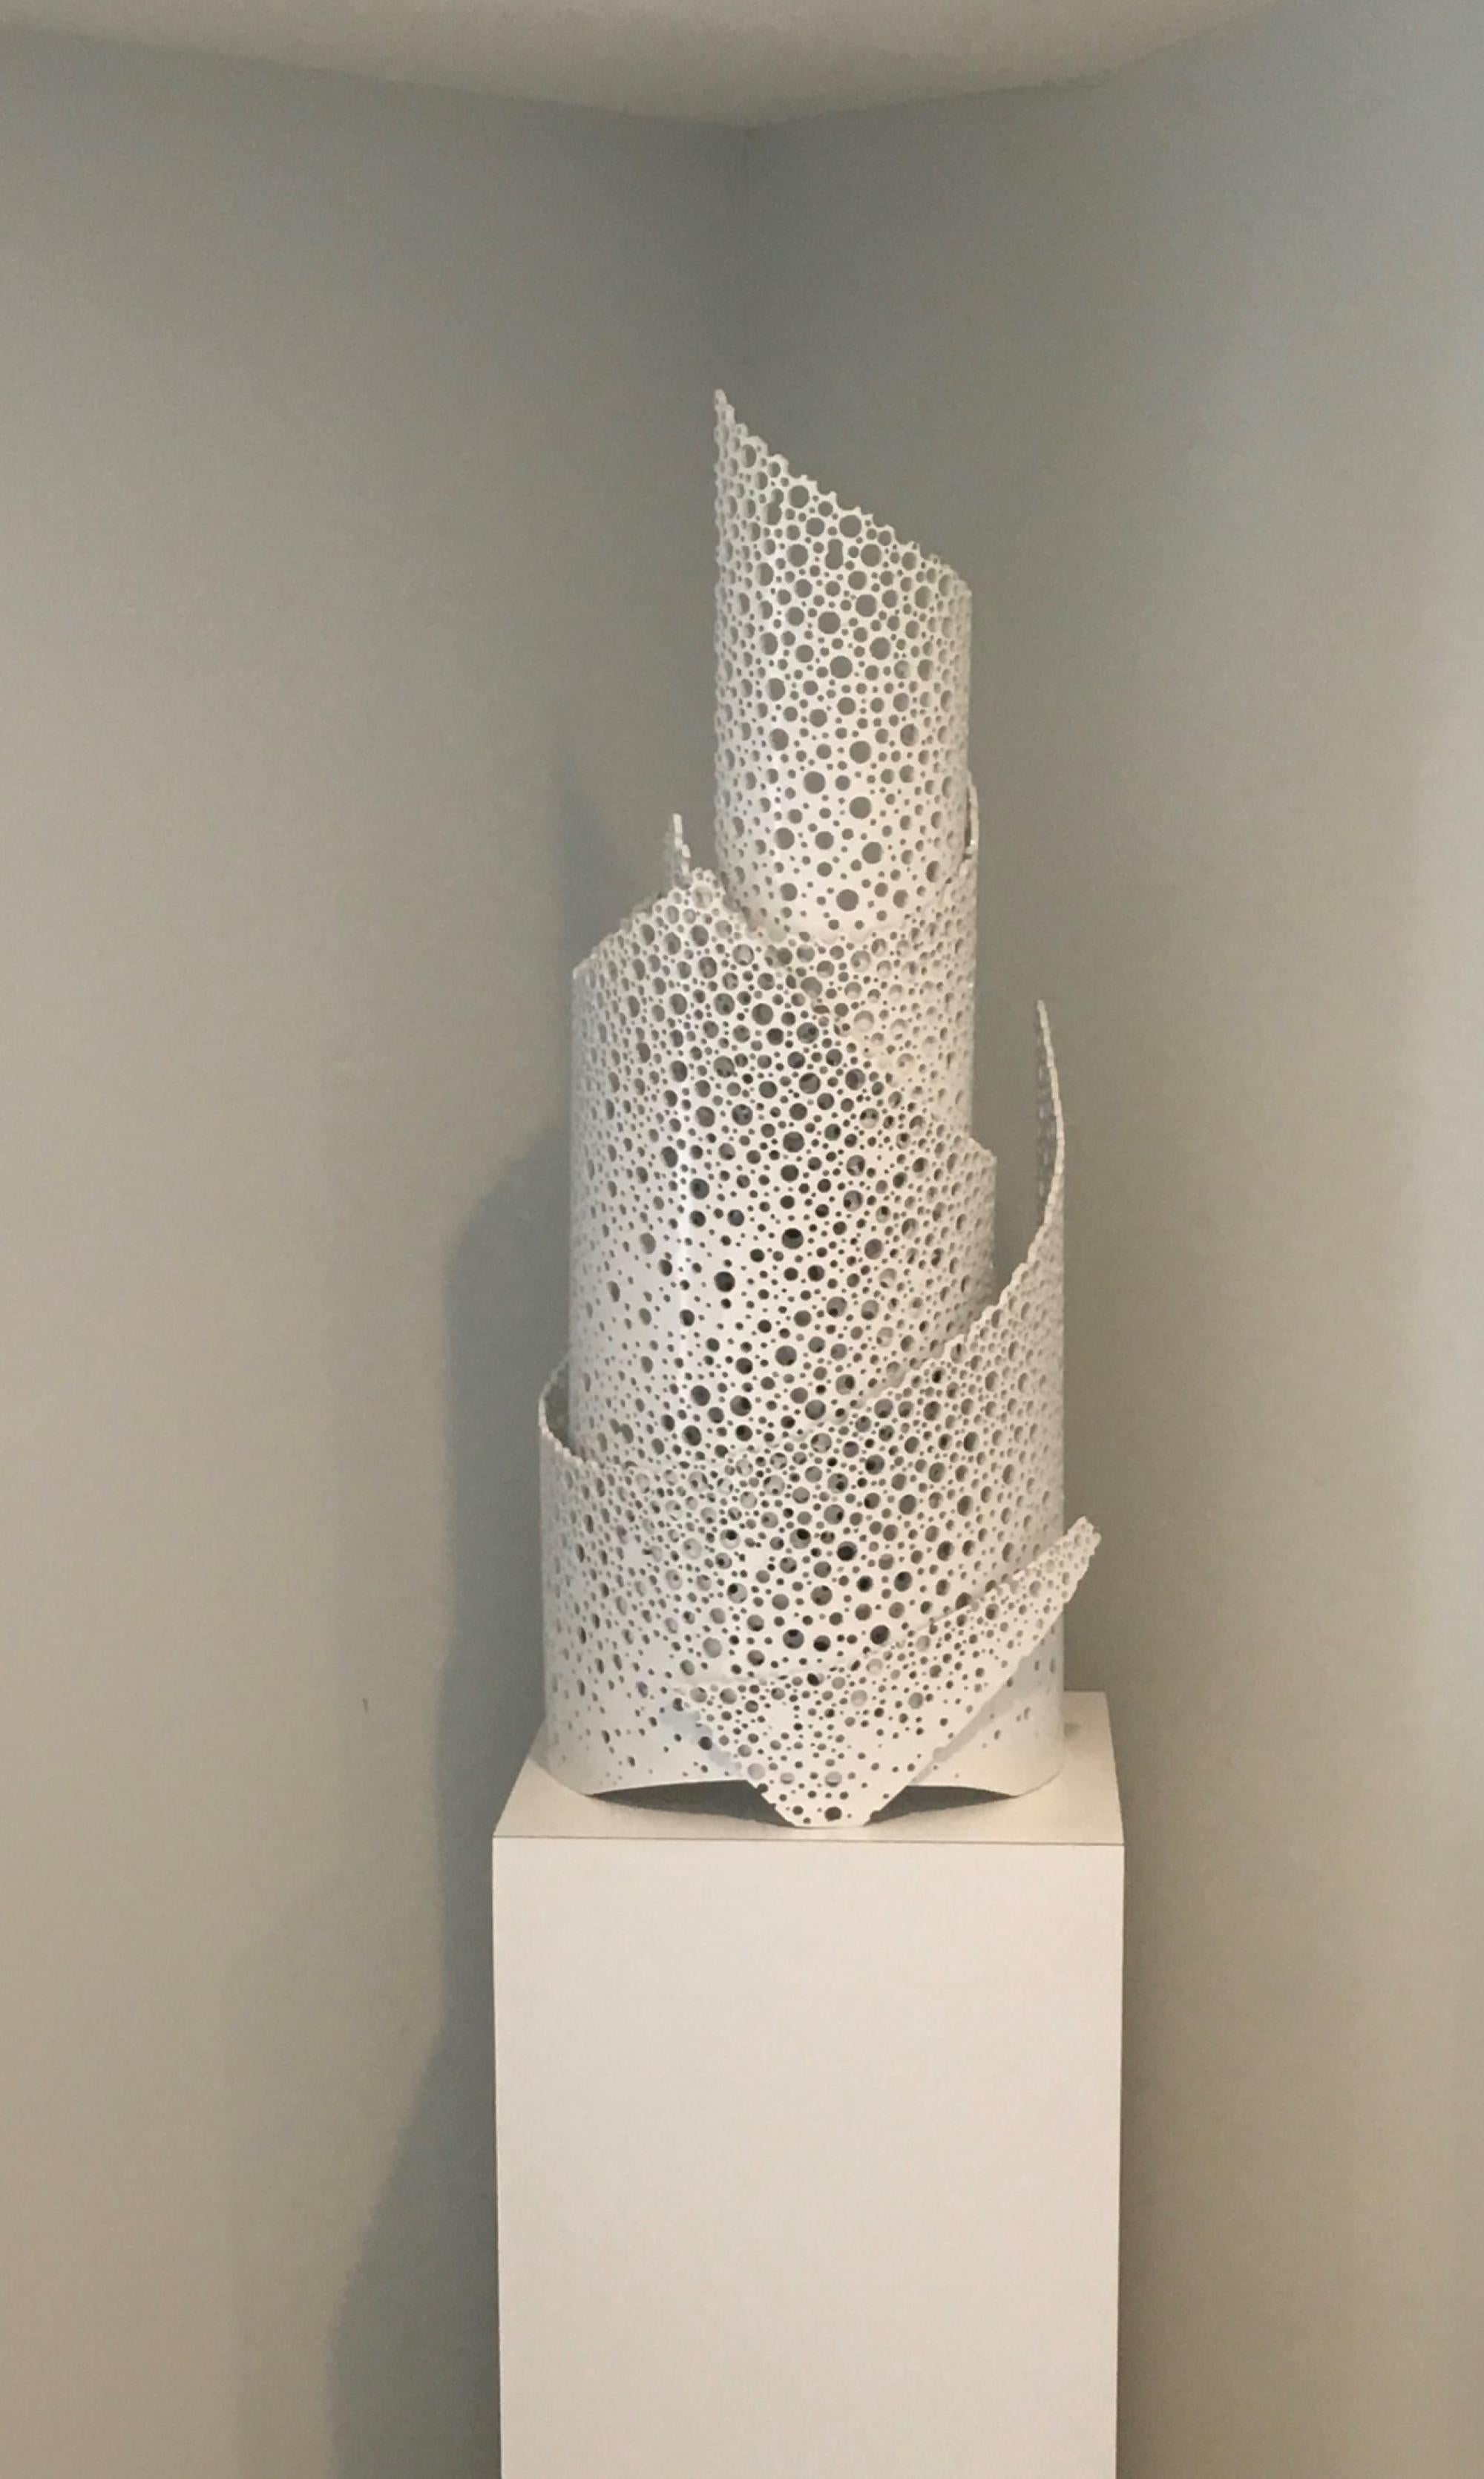 Abstract Sculpture Michael Enn Sirvet - De nombreux vents, sculpture, aluminium, rond, blanc, reflets muraux